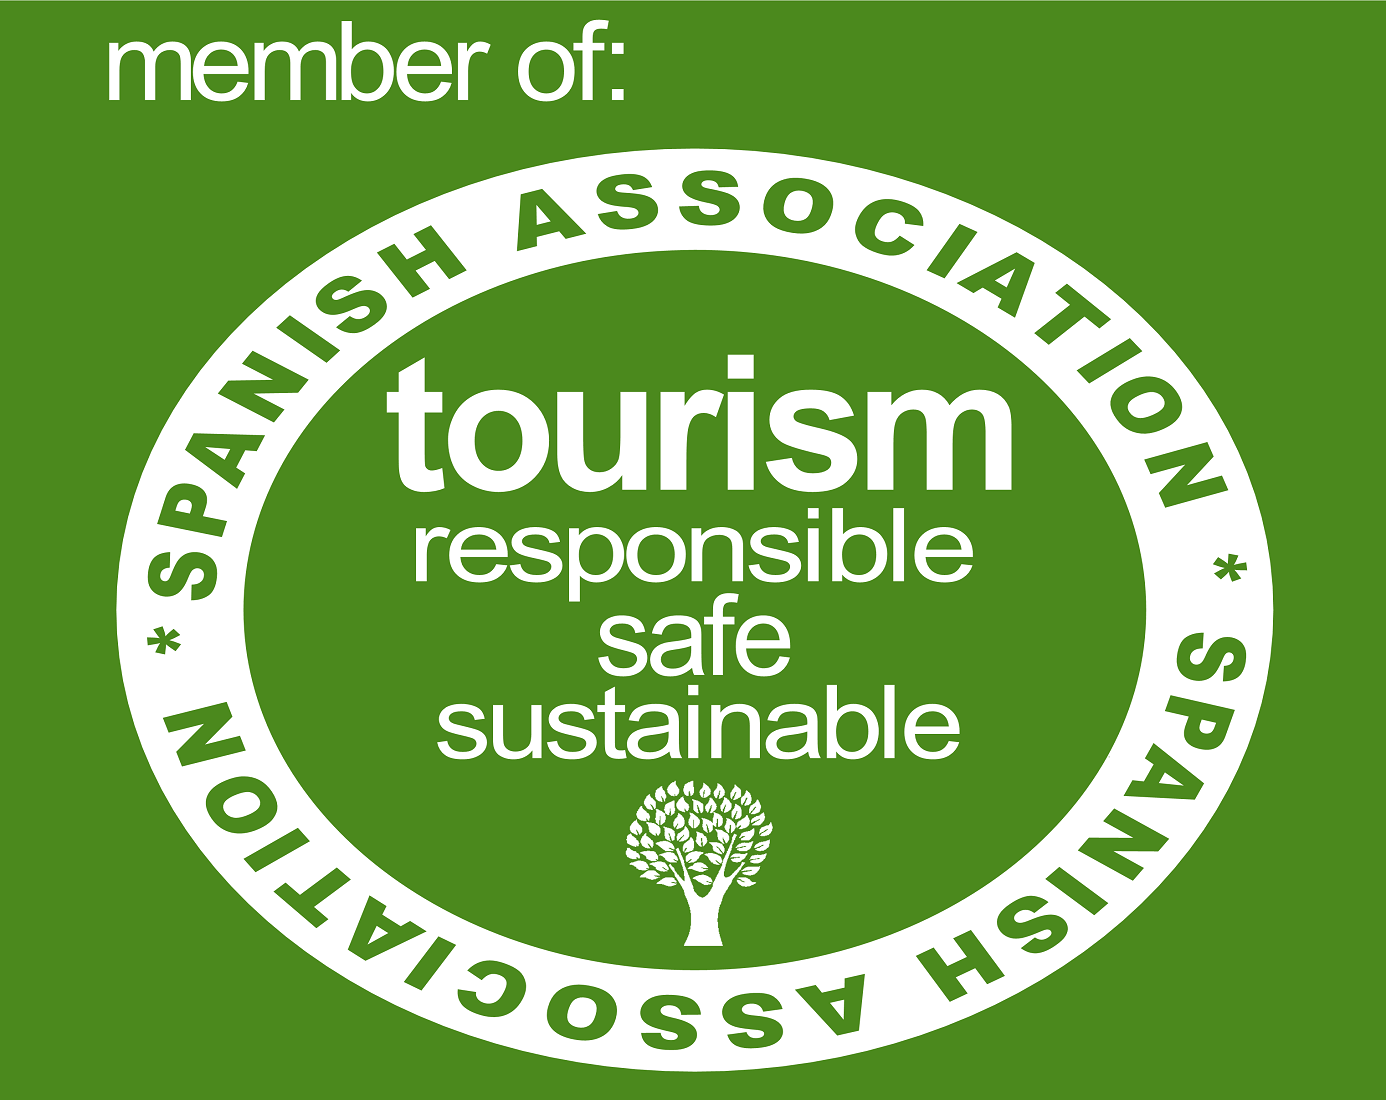 Sustainable Tourism - Turismo Sostenable